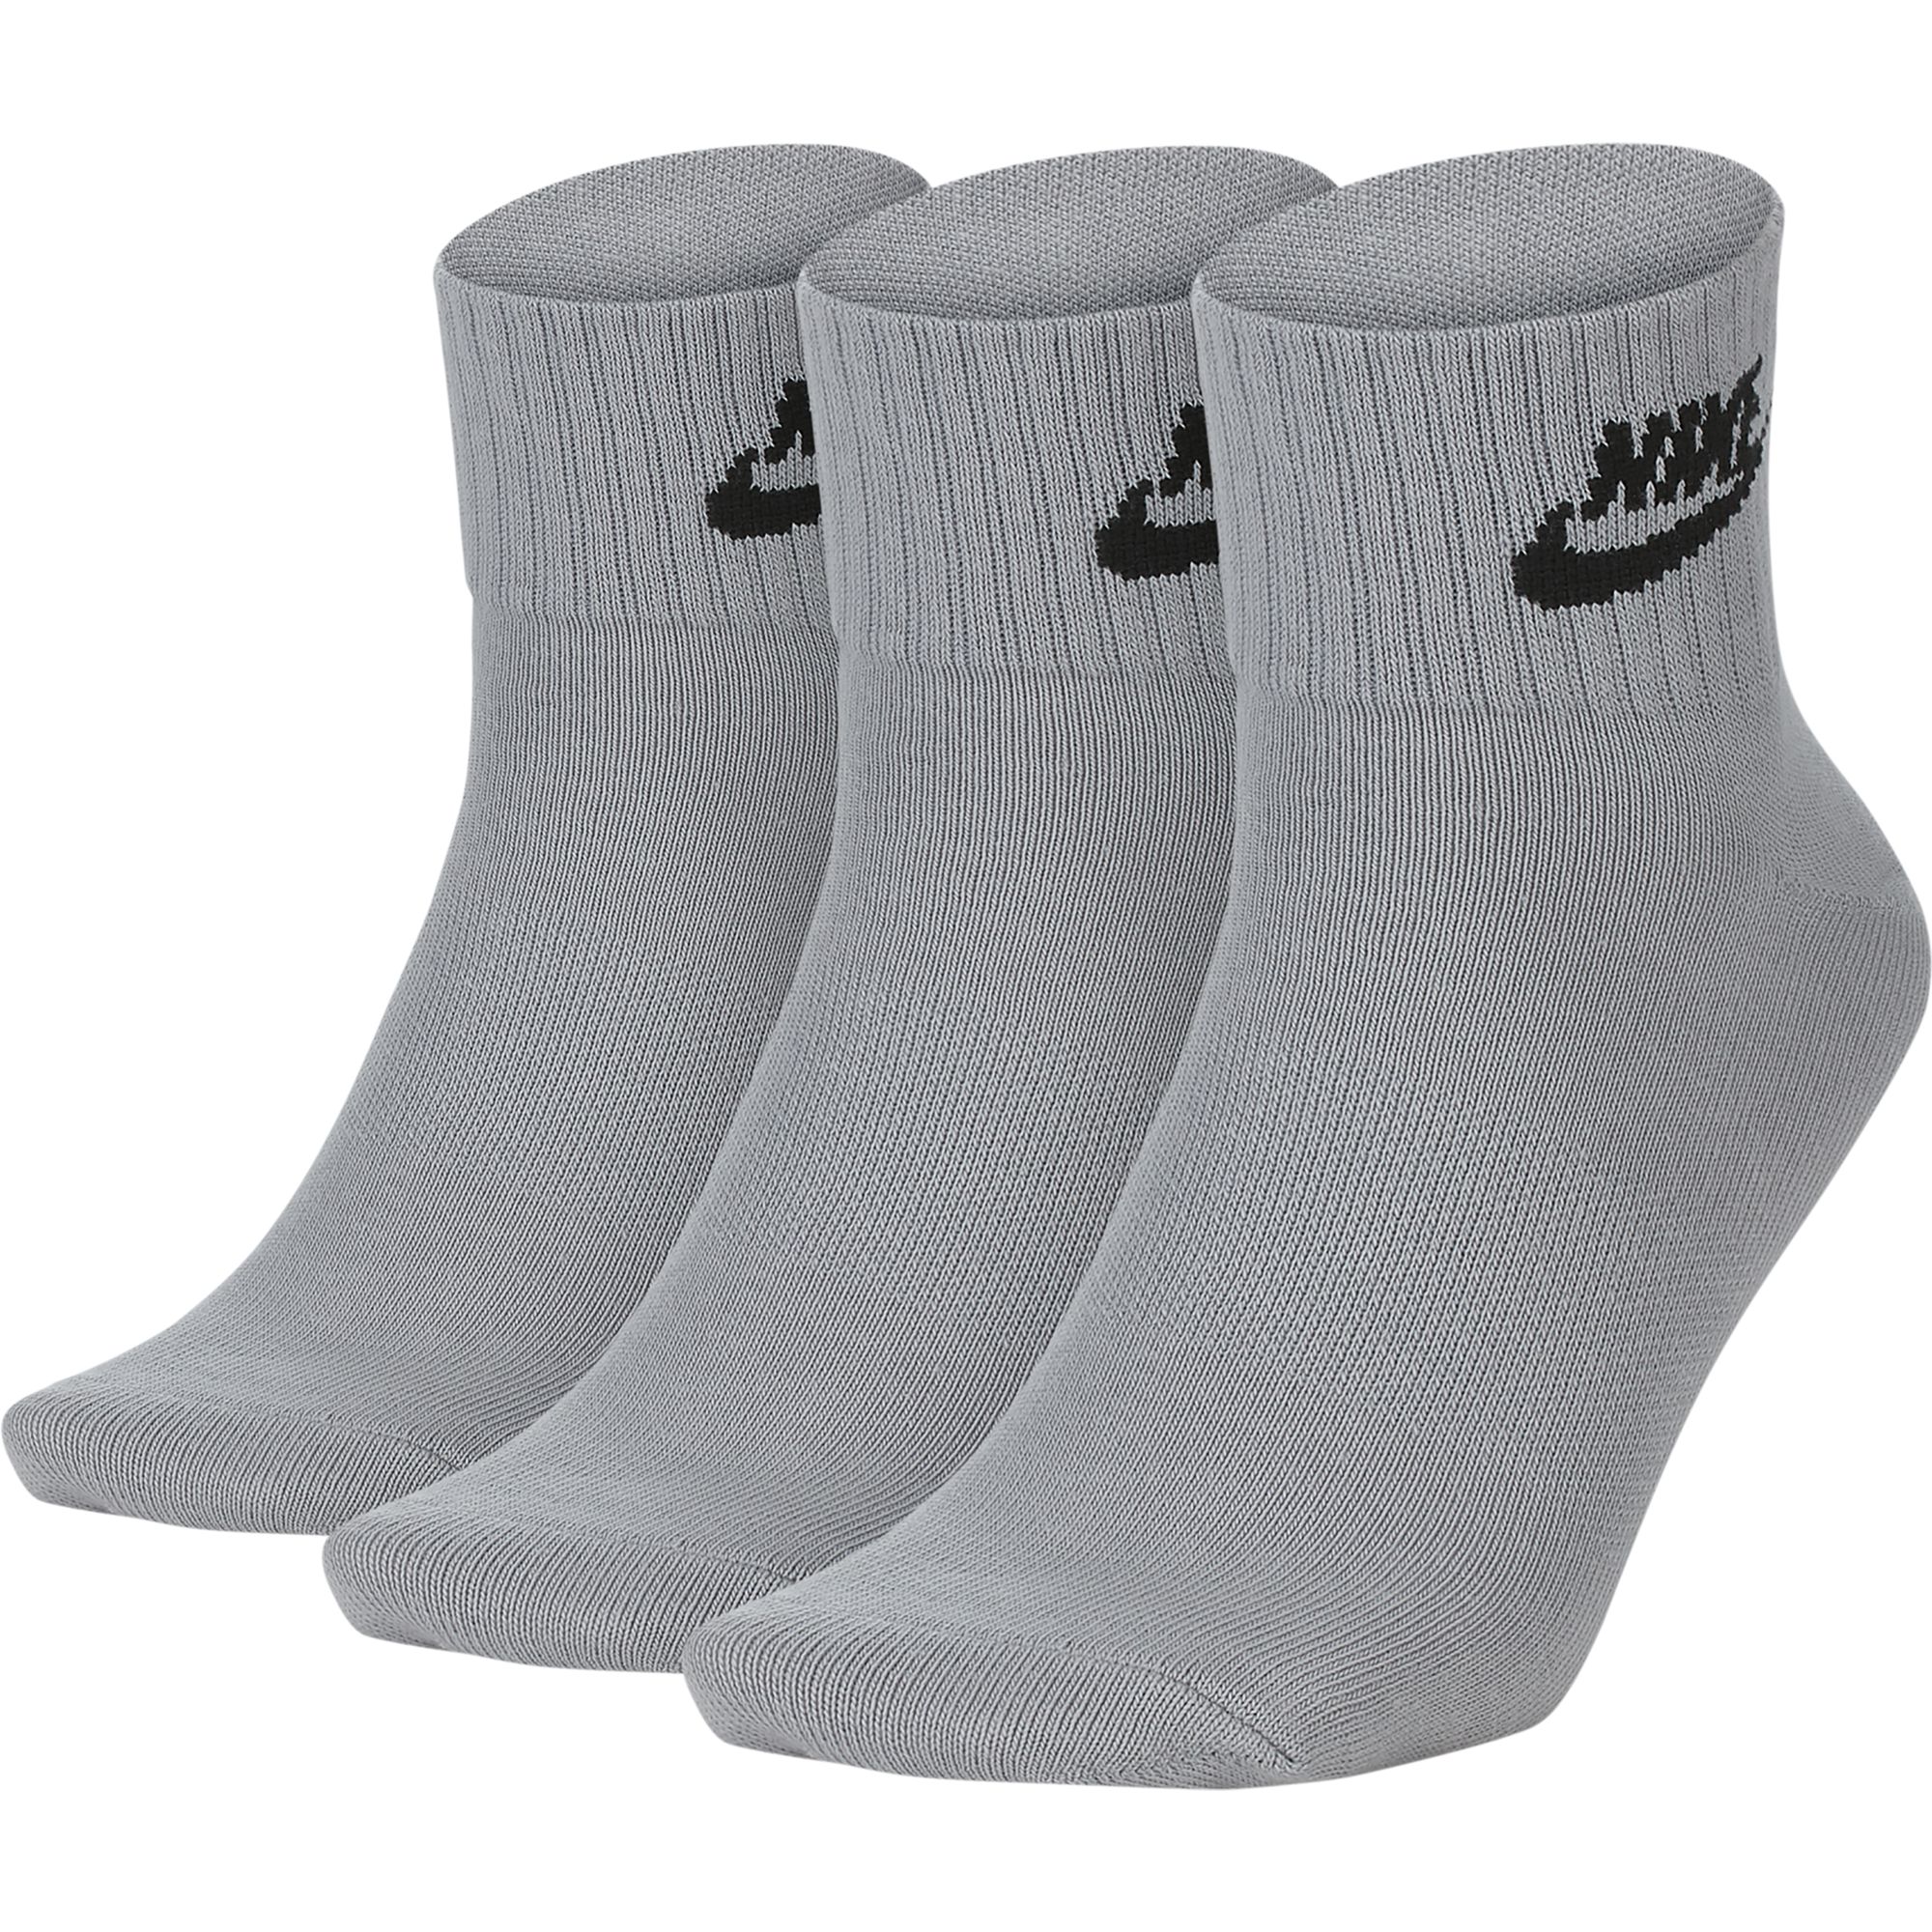 Носки найк короткие. Носки Nike Essential. Носки Nike everyday. Носки найк серые короткие. Носки найк женские.